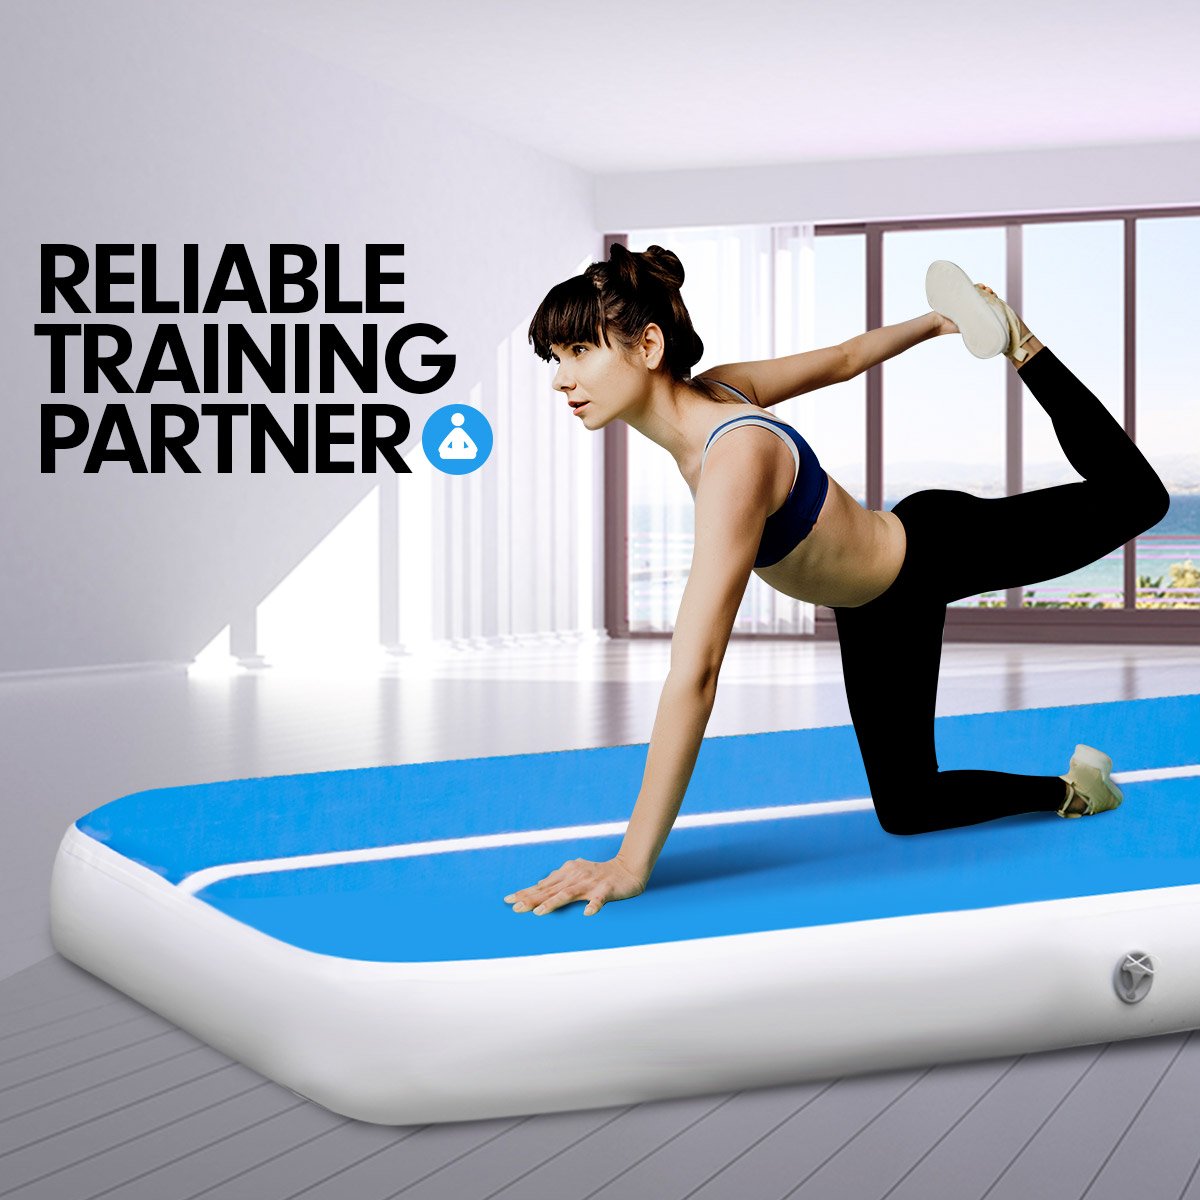 5m x 1m Air Track Inflatable Tumbling Gymnastics Mat - Blue White